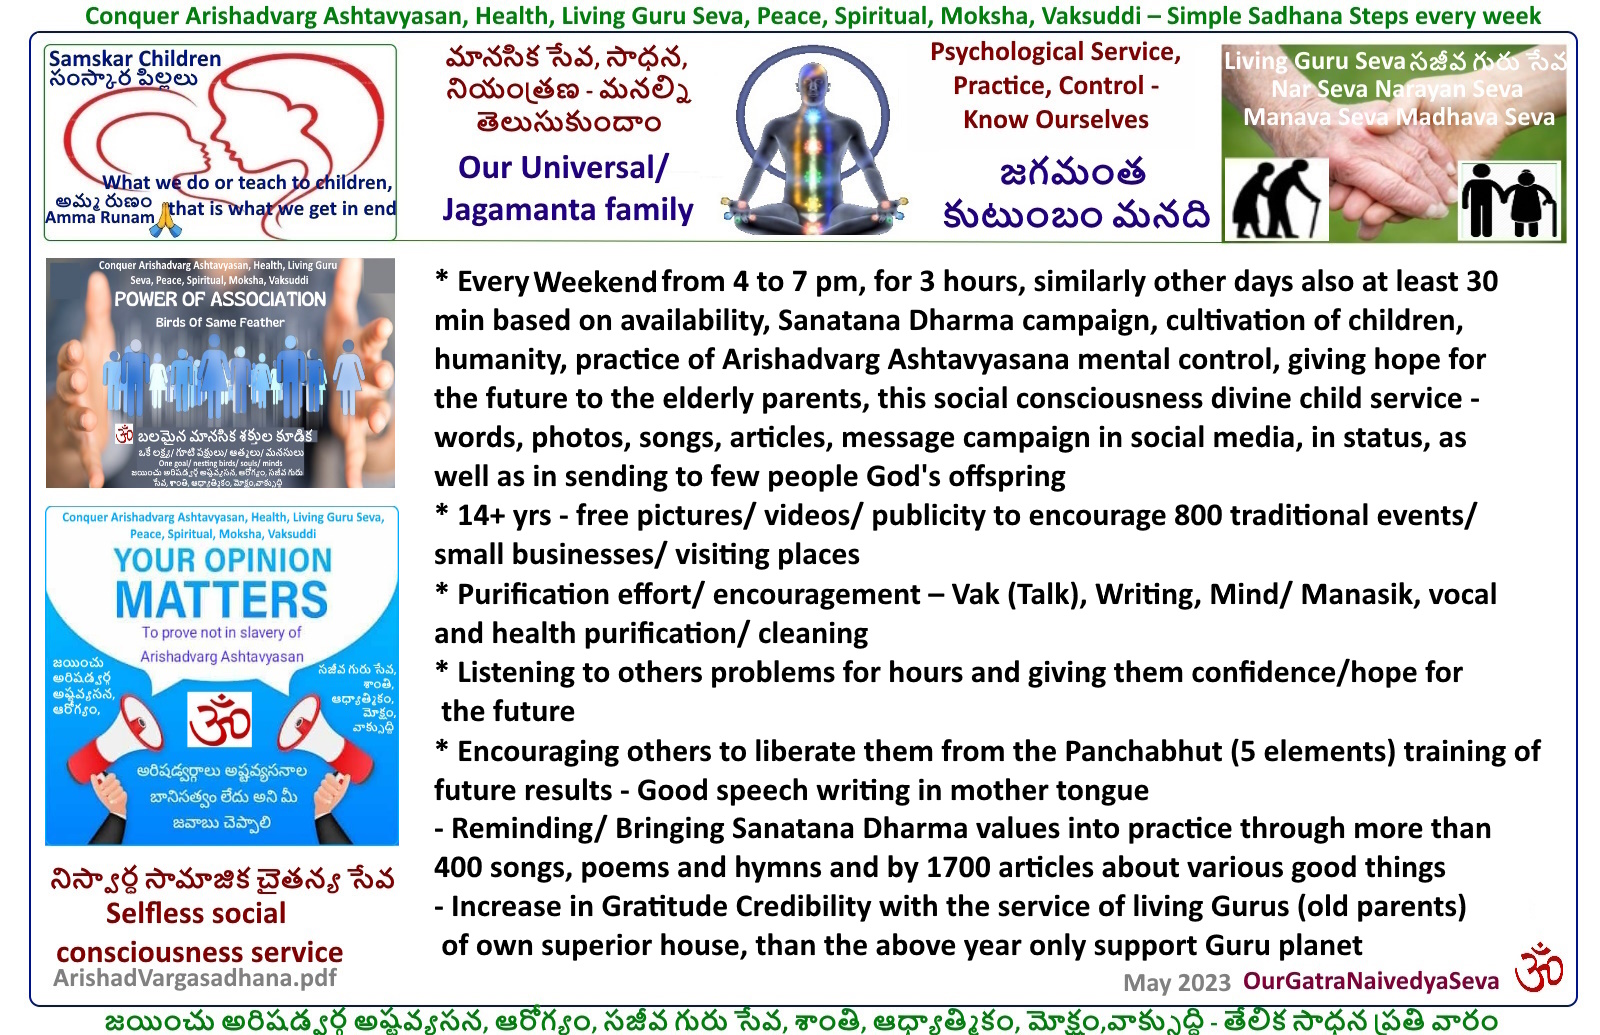 Our Universal/ Jagamanta family - Power of Association జగమంత కుటుంబం మనది